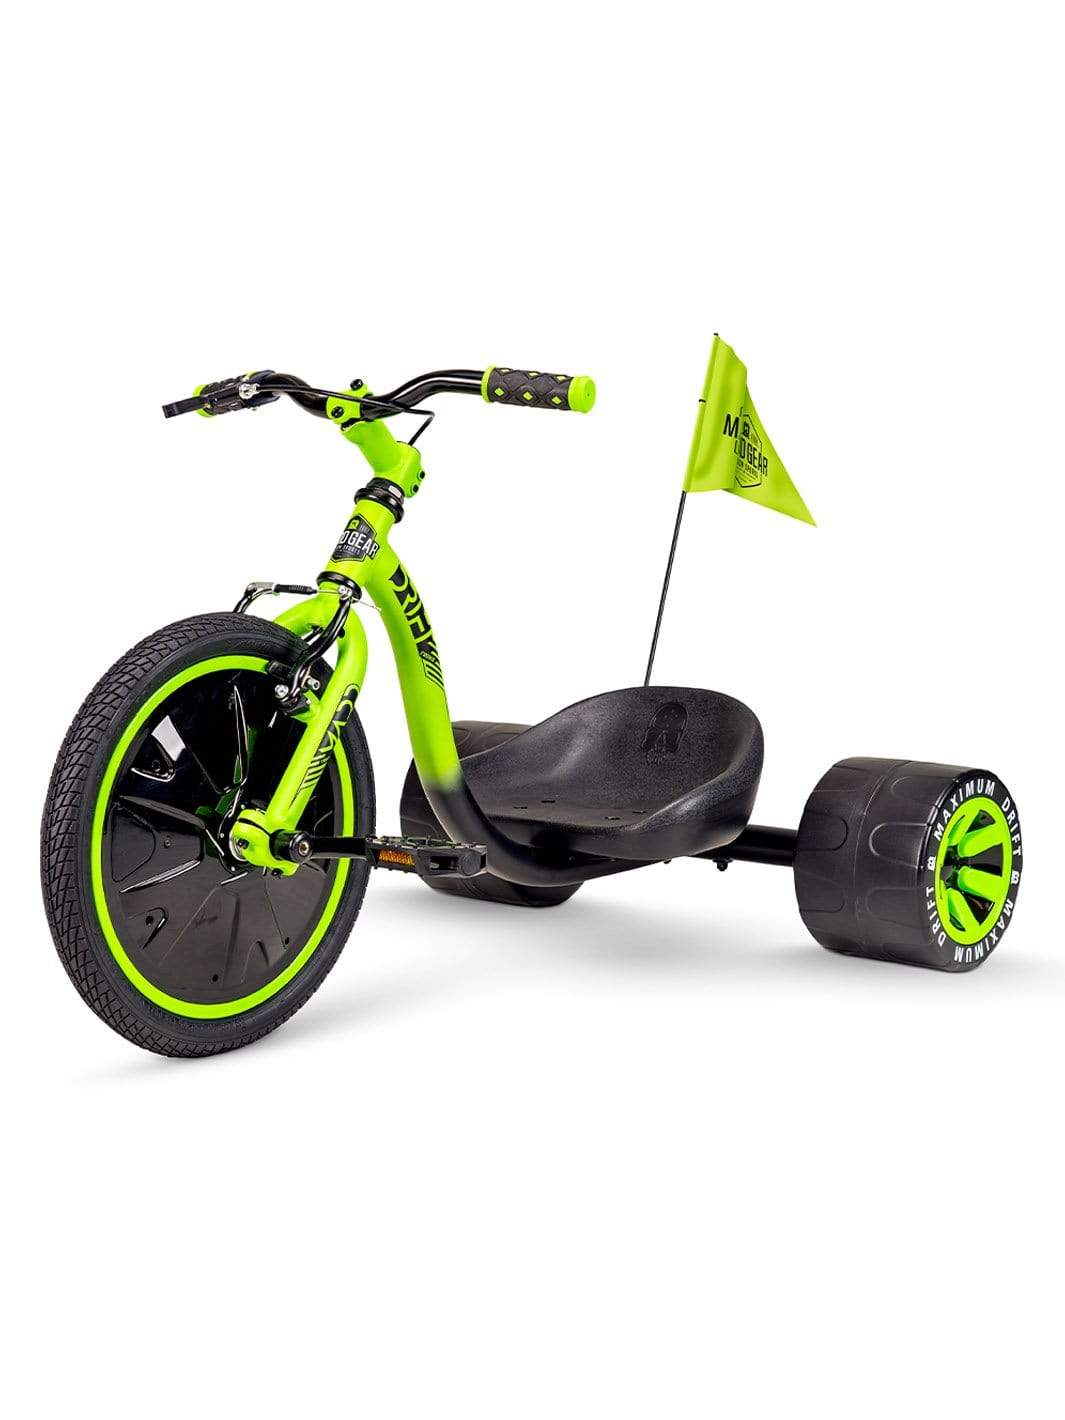 Mad Gear Drift Bike Huffy Green Machine Drifter Tricycle Kids Children Boys Green MGP